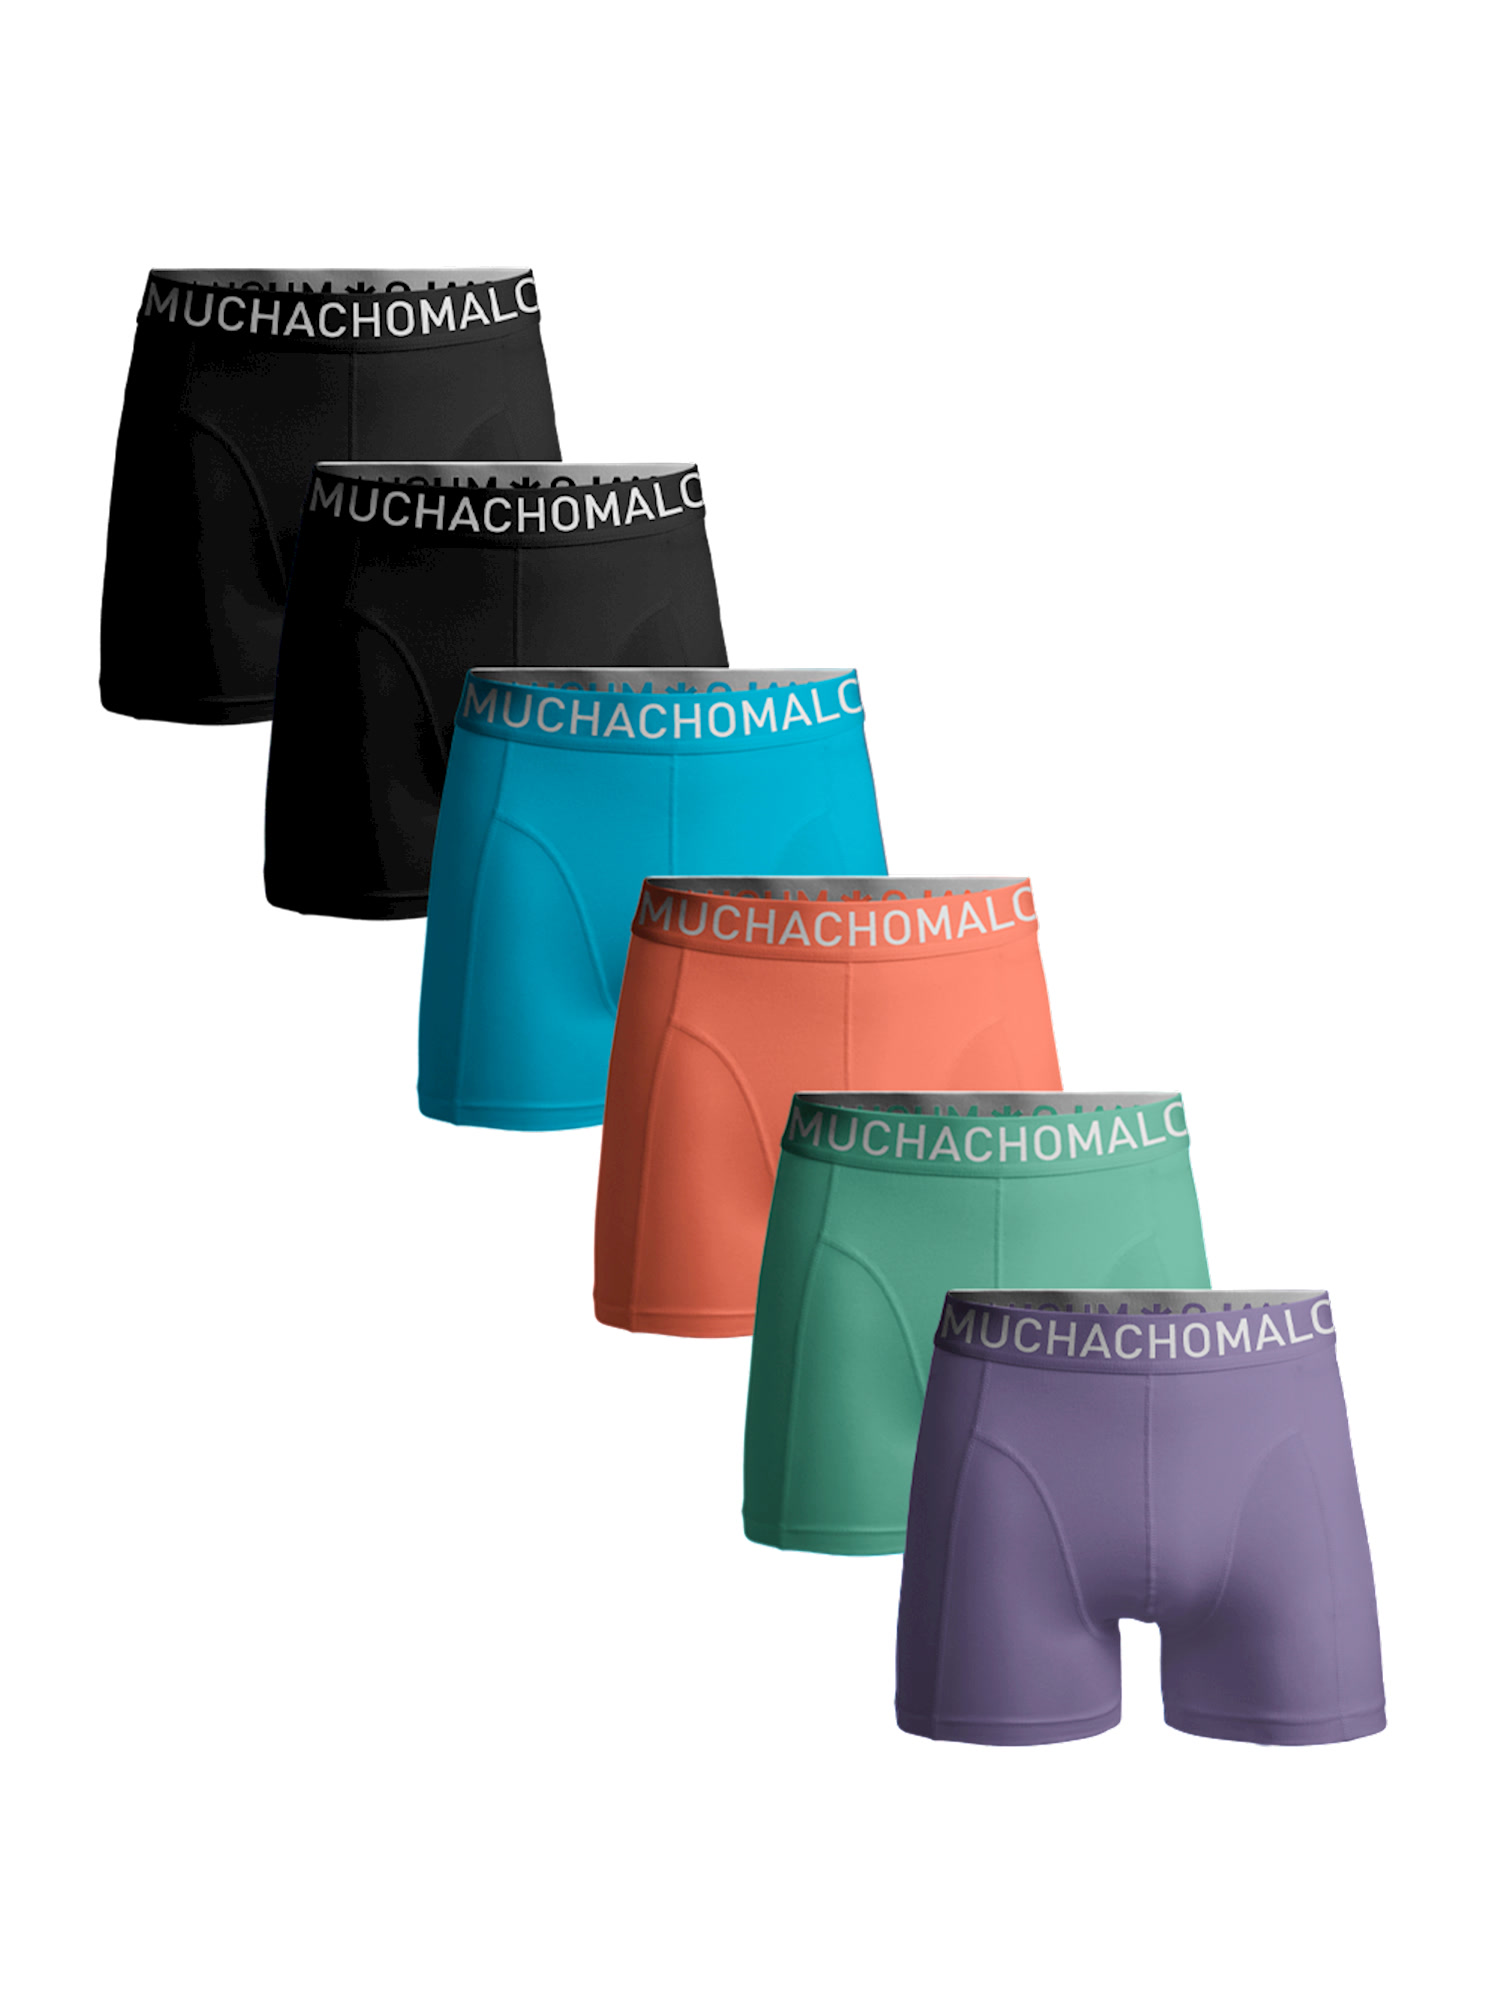 Боксеры Muchachomalo 6er-Set: Boxershorts, цвет Black/Black/Blue/Pink/Green/Purple боксеры muchachomalo 5er set boxershorts цвет black blue blue green green